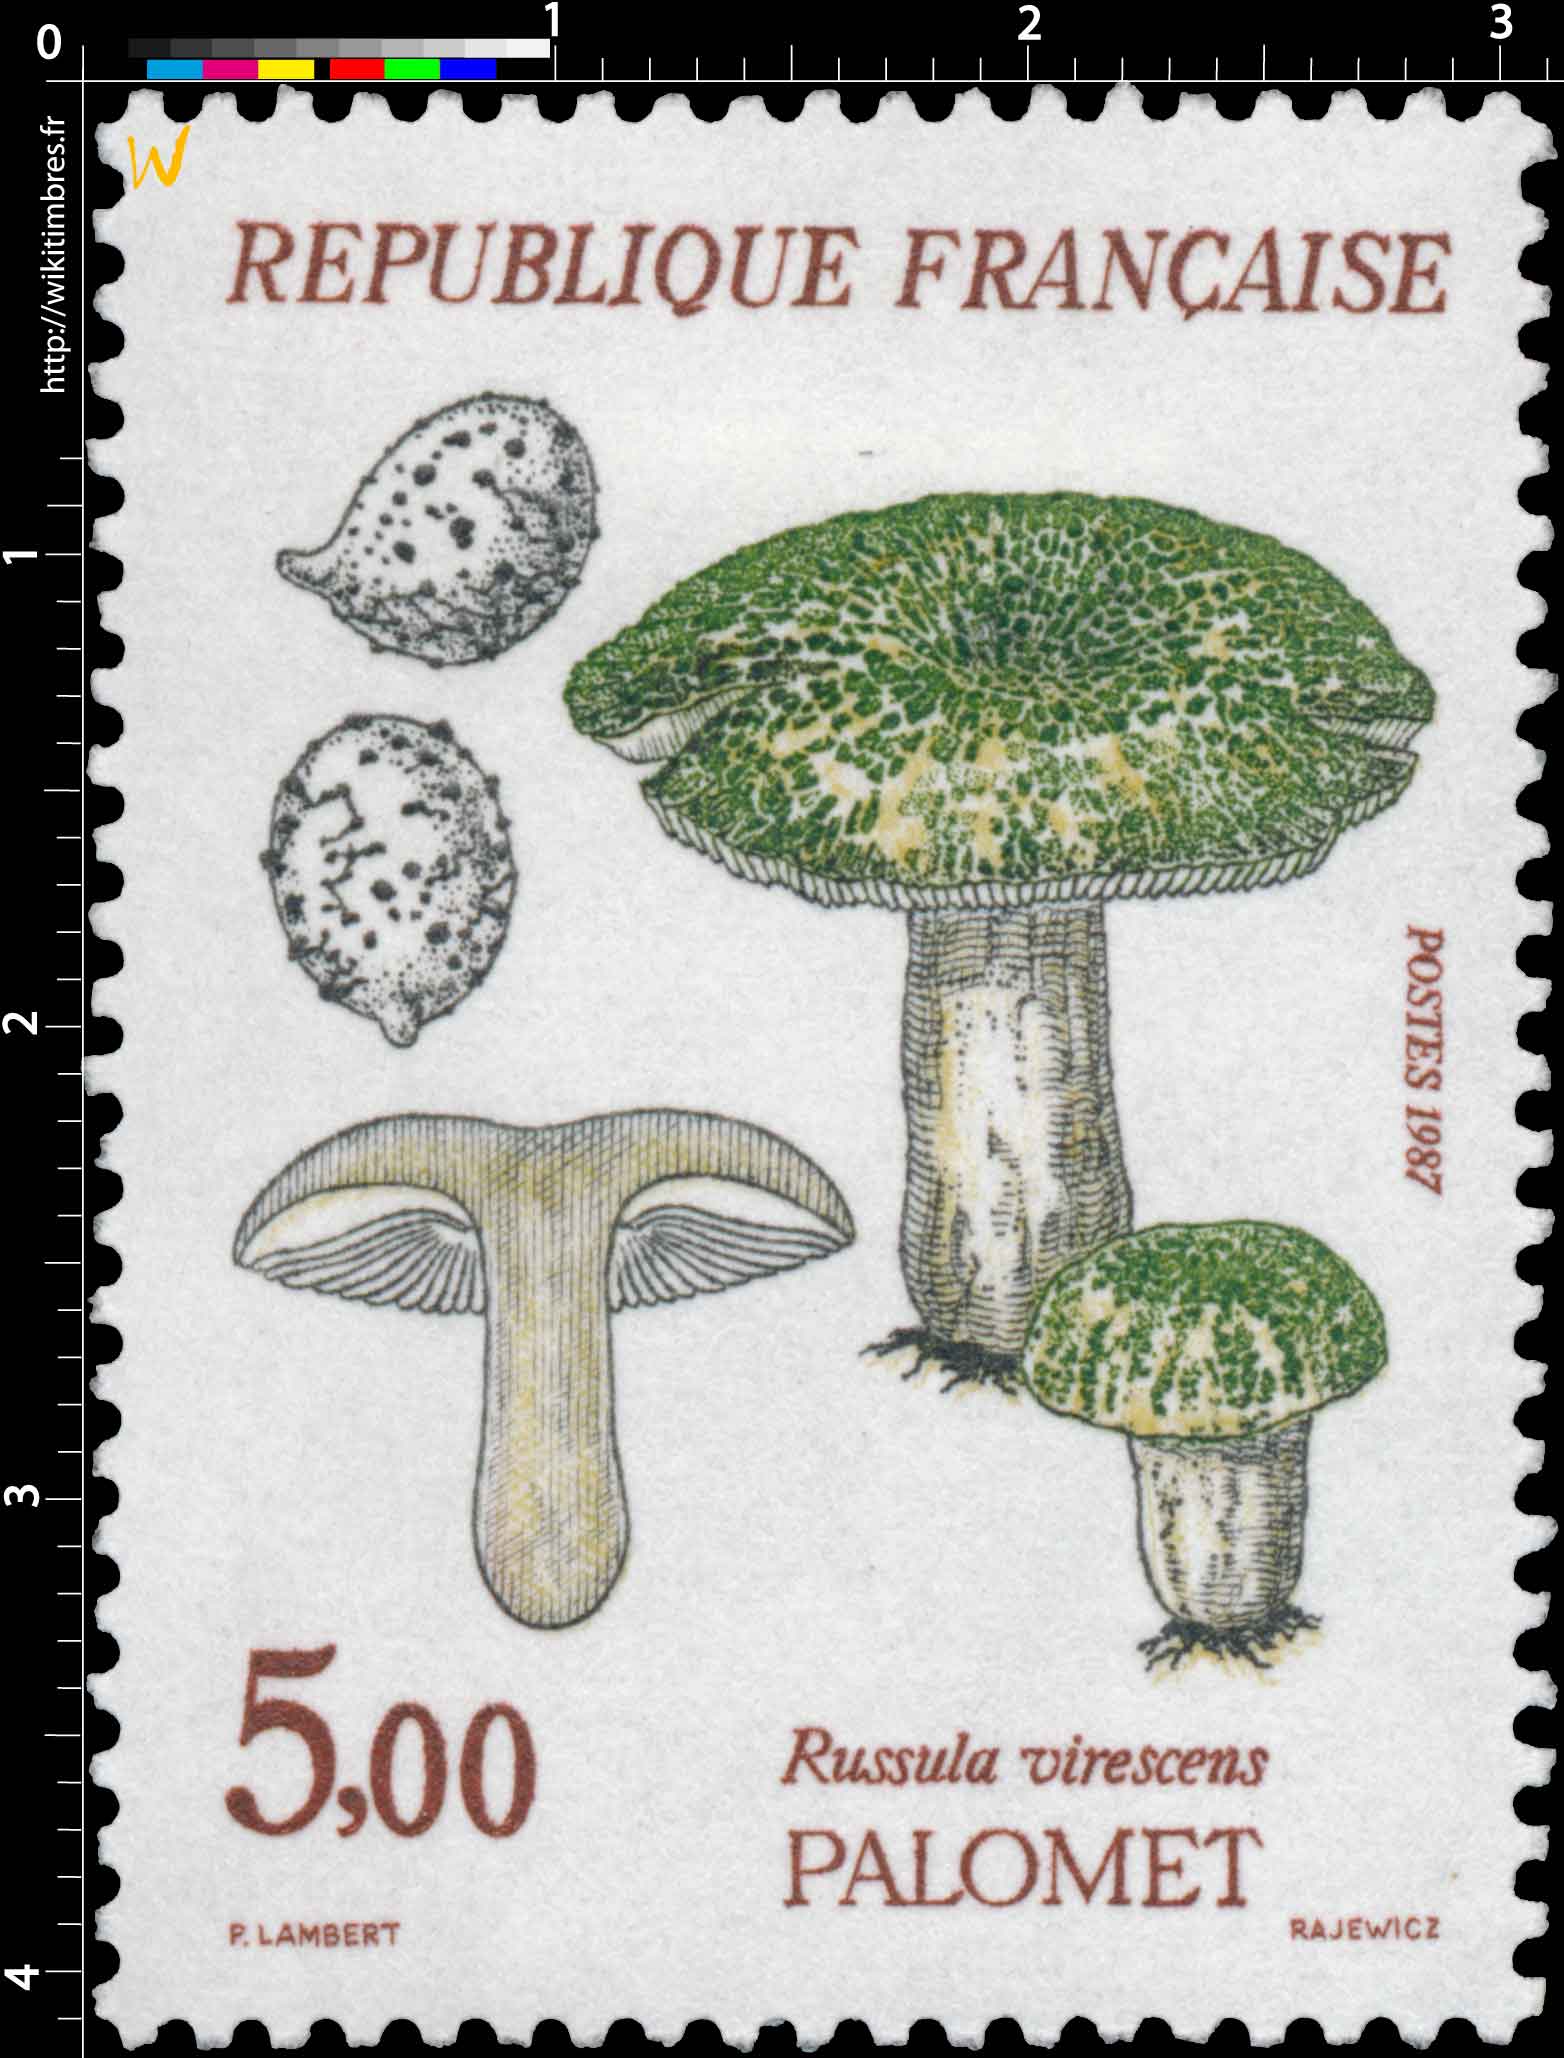 1987 PALOMET Russula virescens